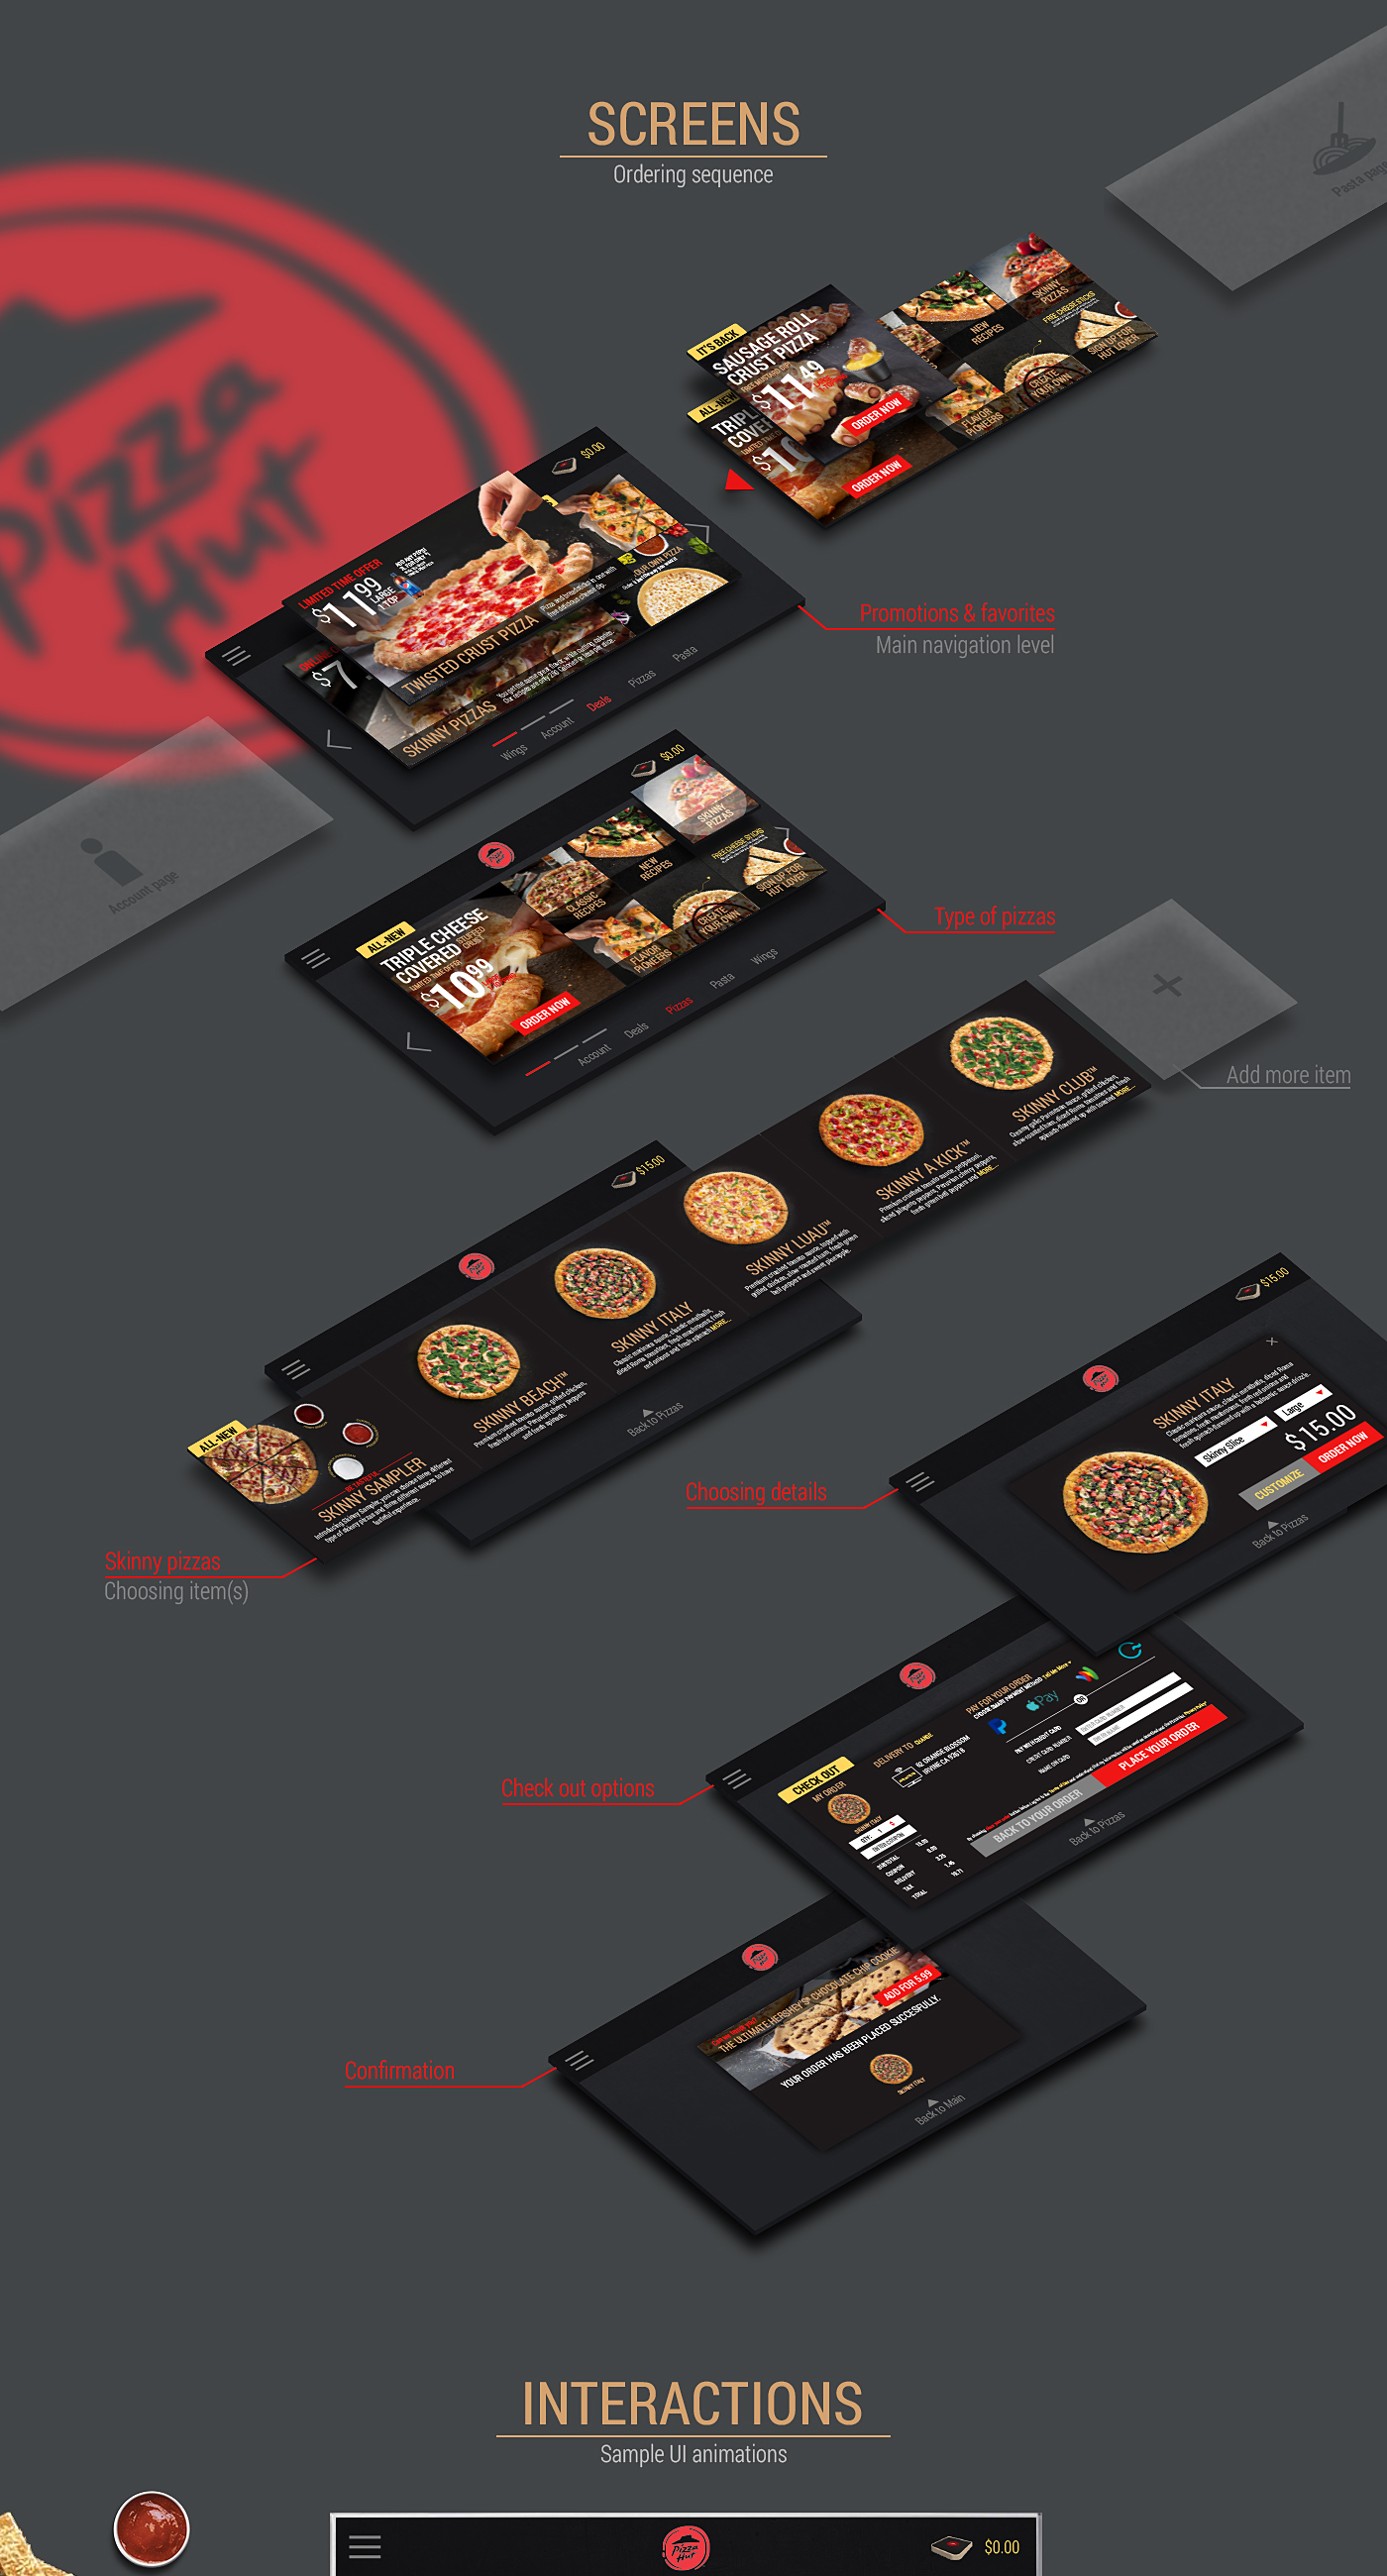 Pizzahut Smart TV smart TV application Gneiss Smart Remo application concept food application e-commerce